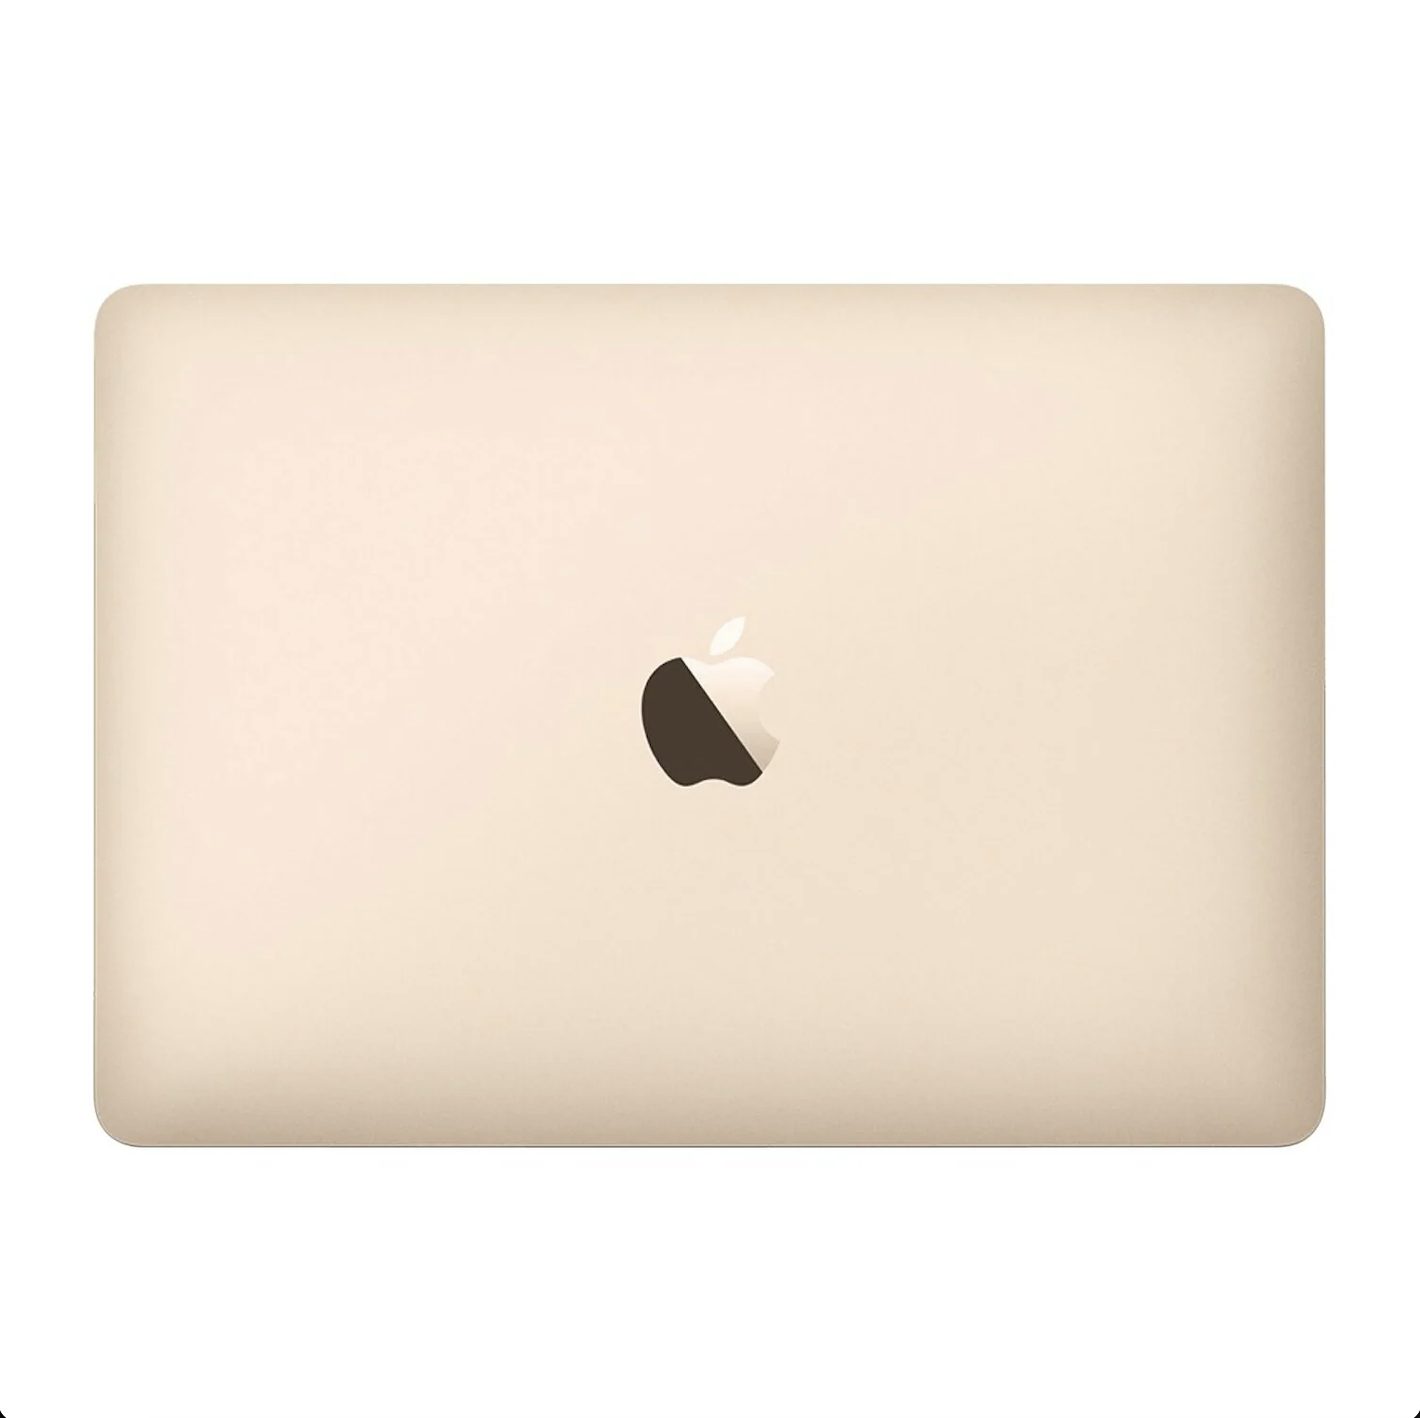 MacBook (Retina, 12-inch, Early 2016)